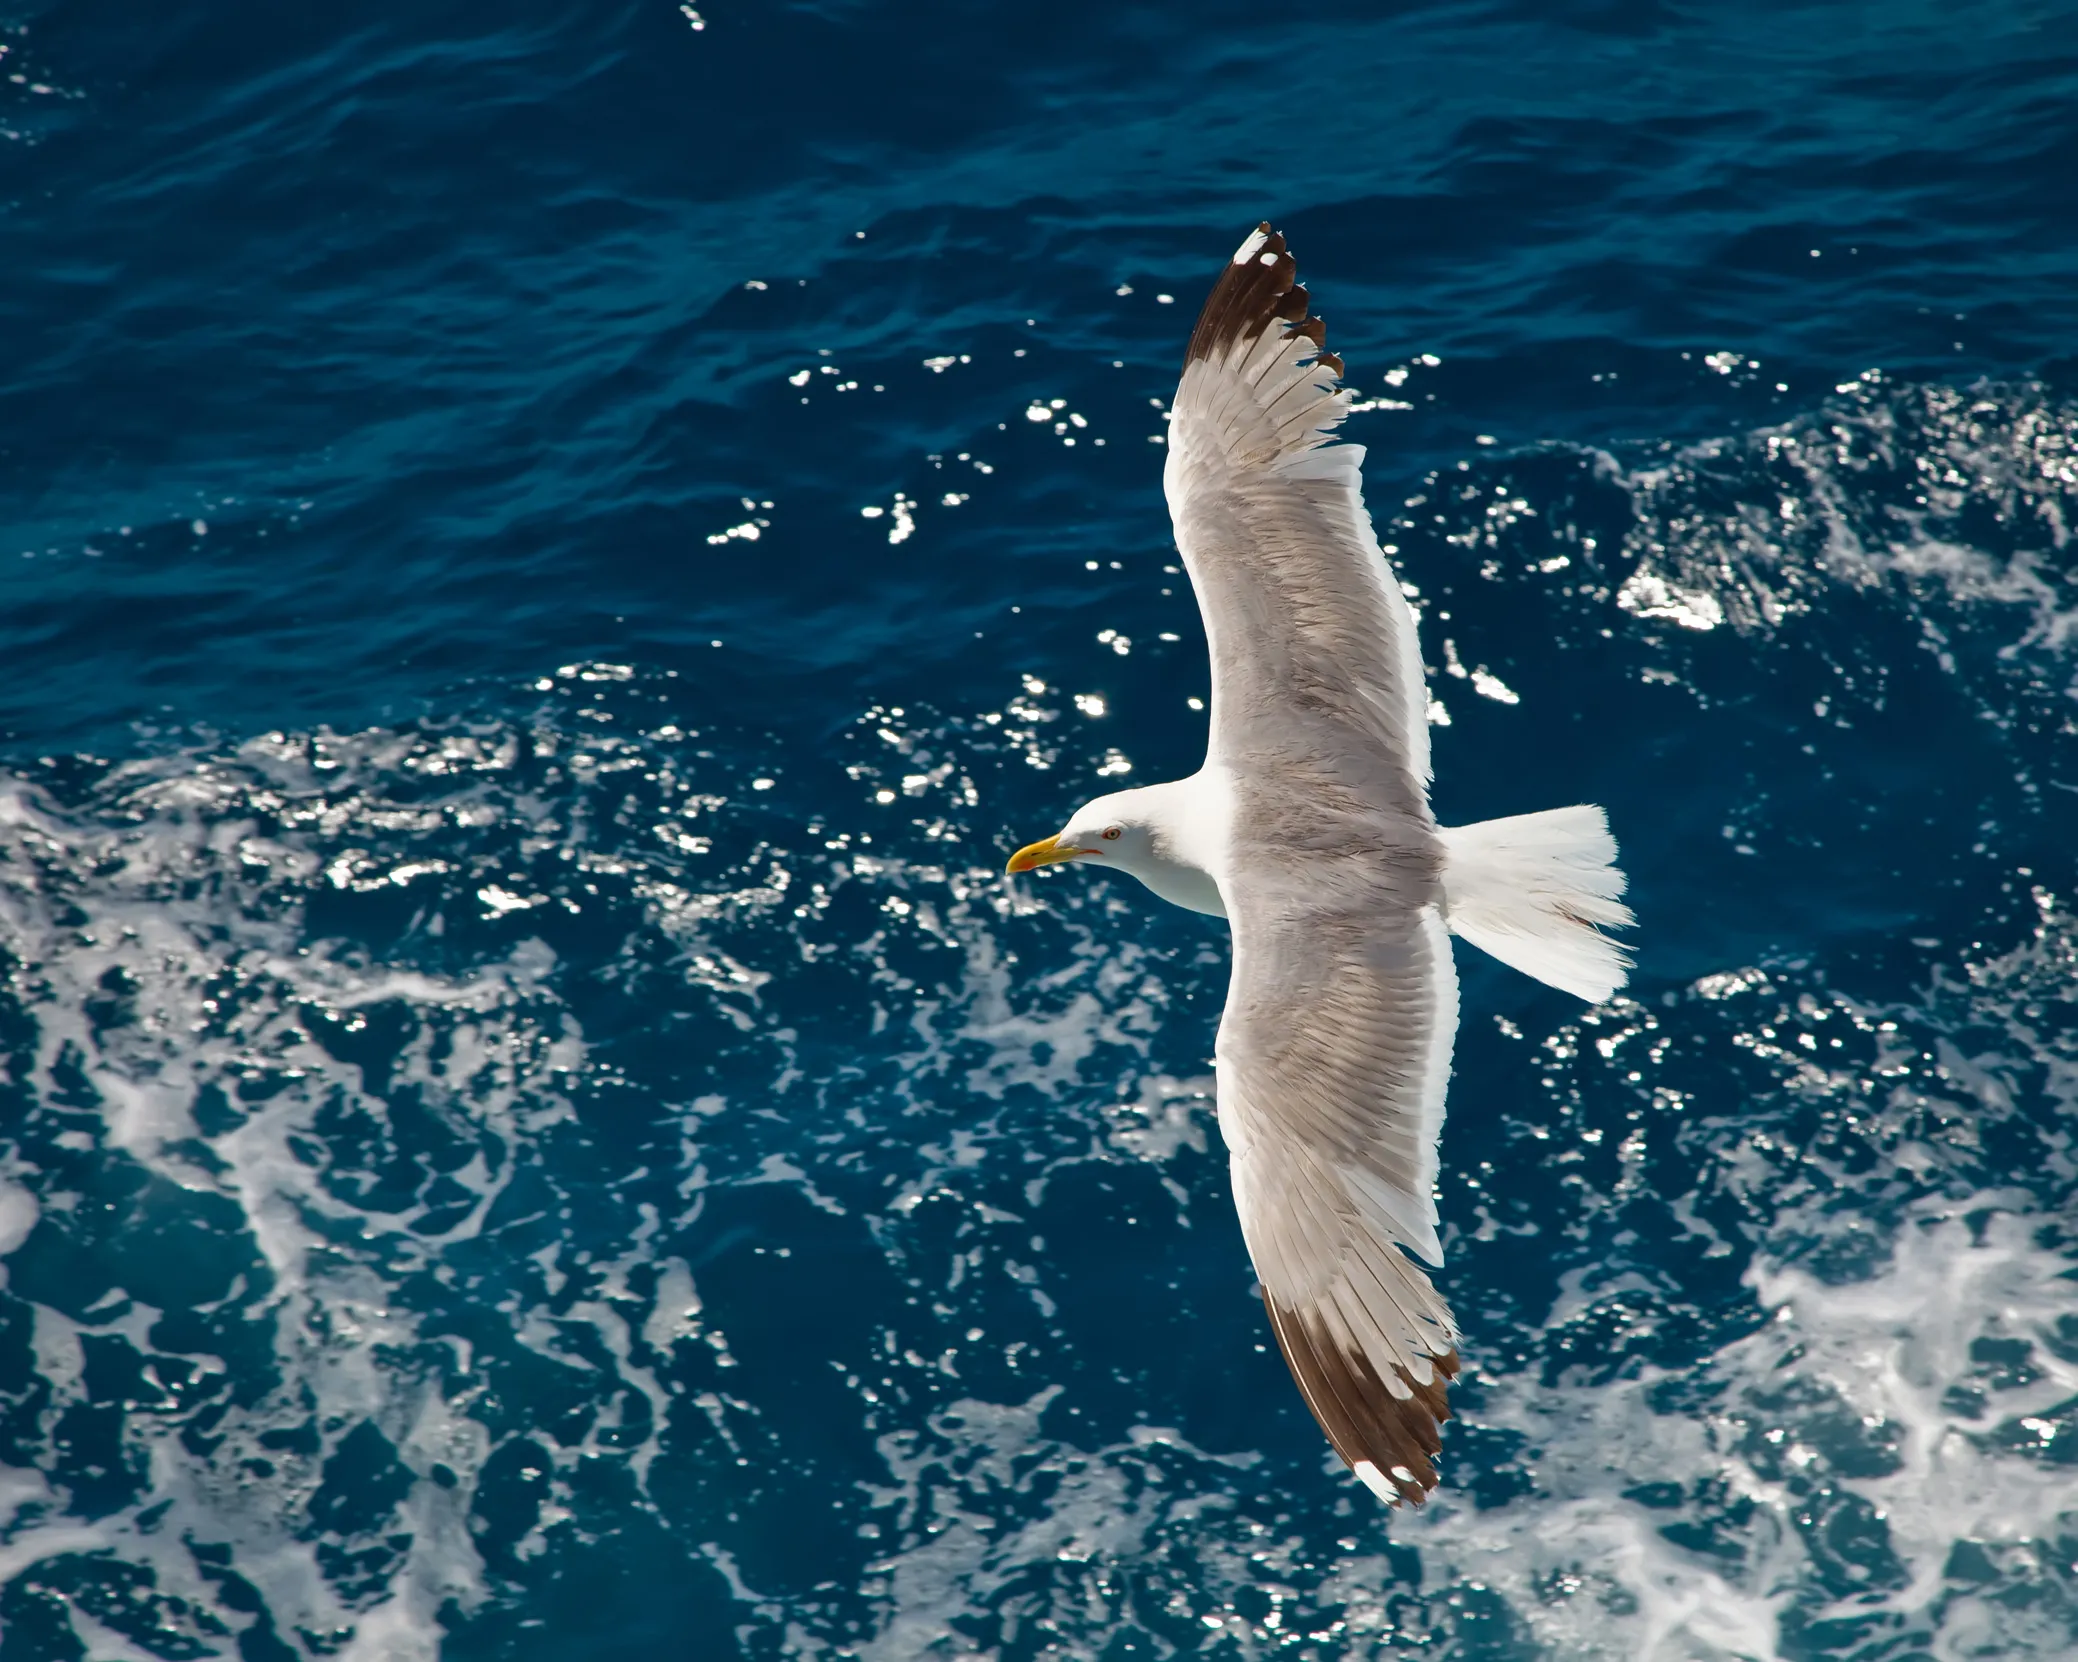 A birds eye view of a lone Gull flying over a choppy sea.